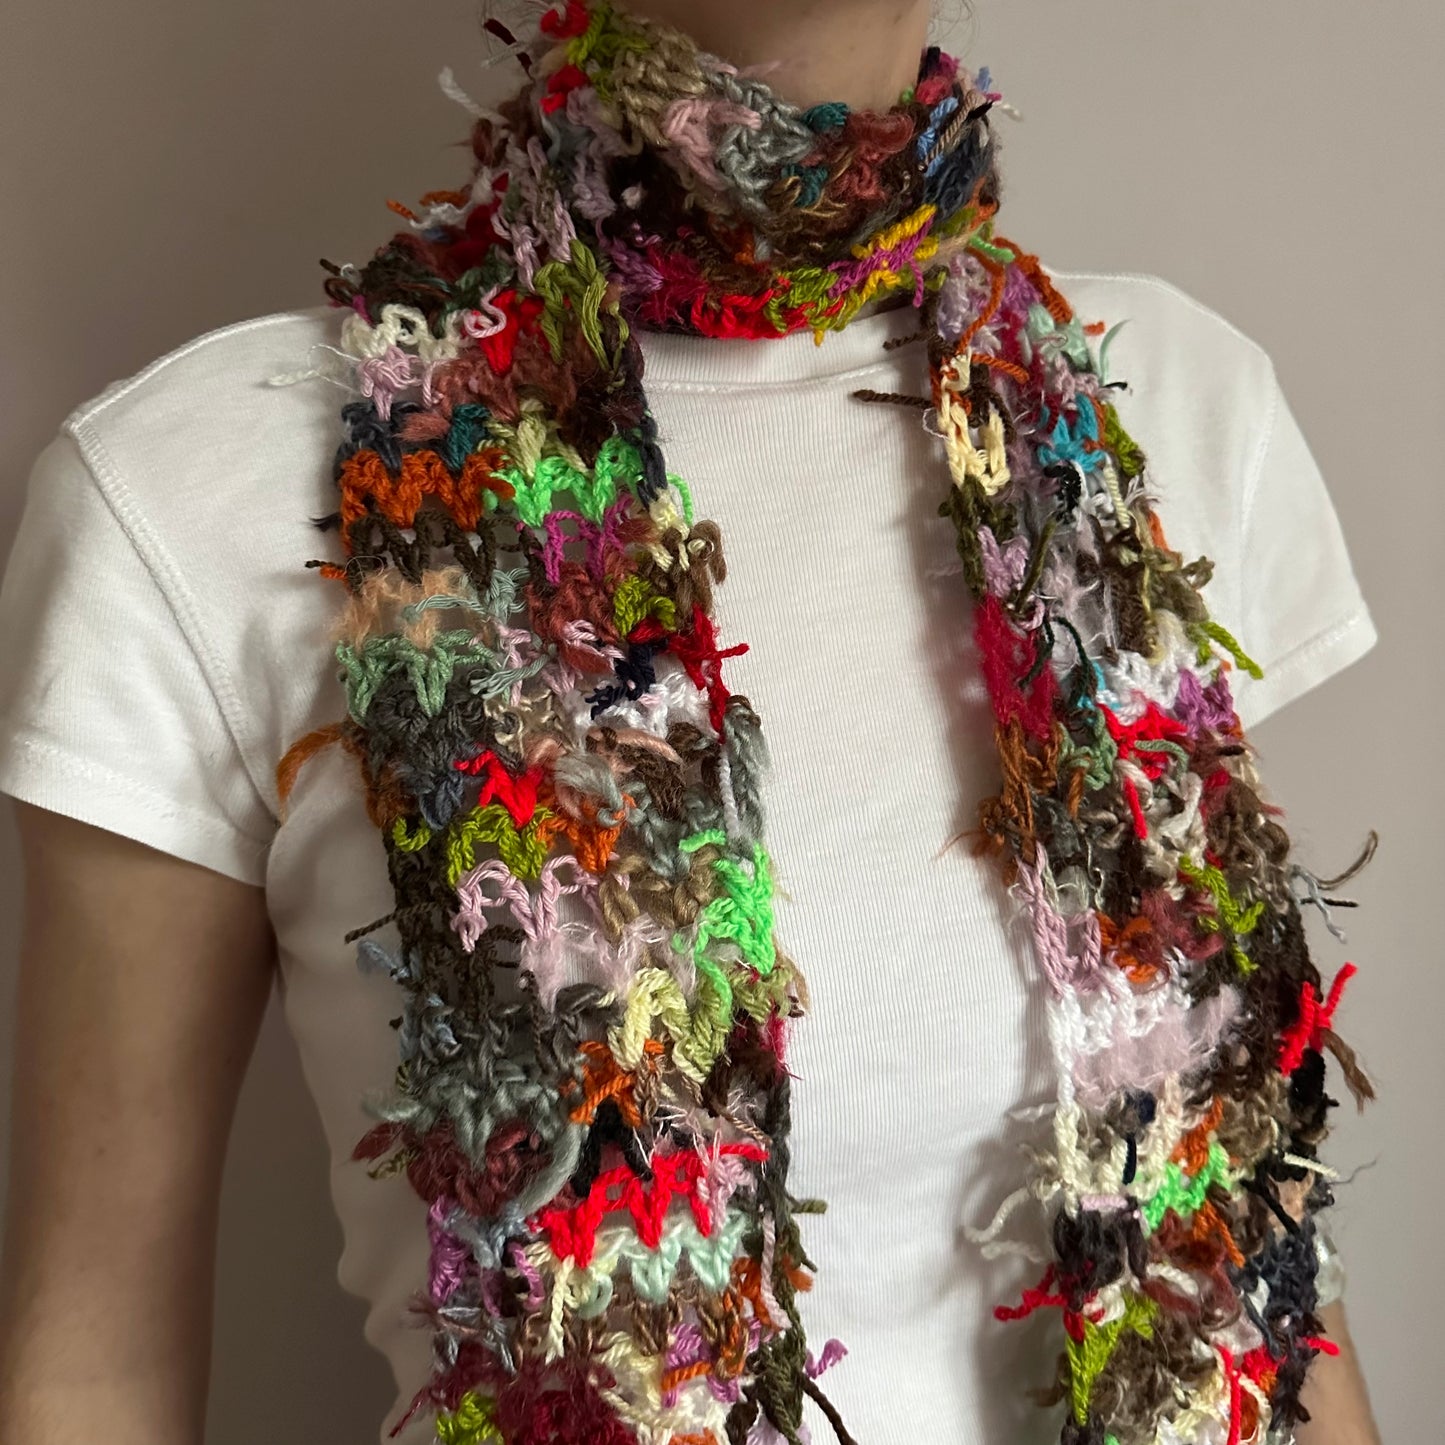 Scrappy skinny scarf #1 - handmade from leftover yarn scraps